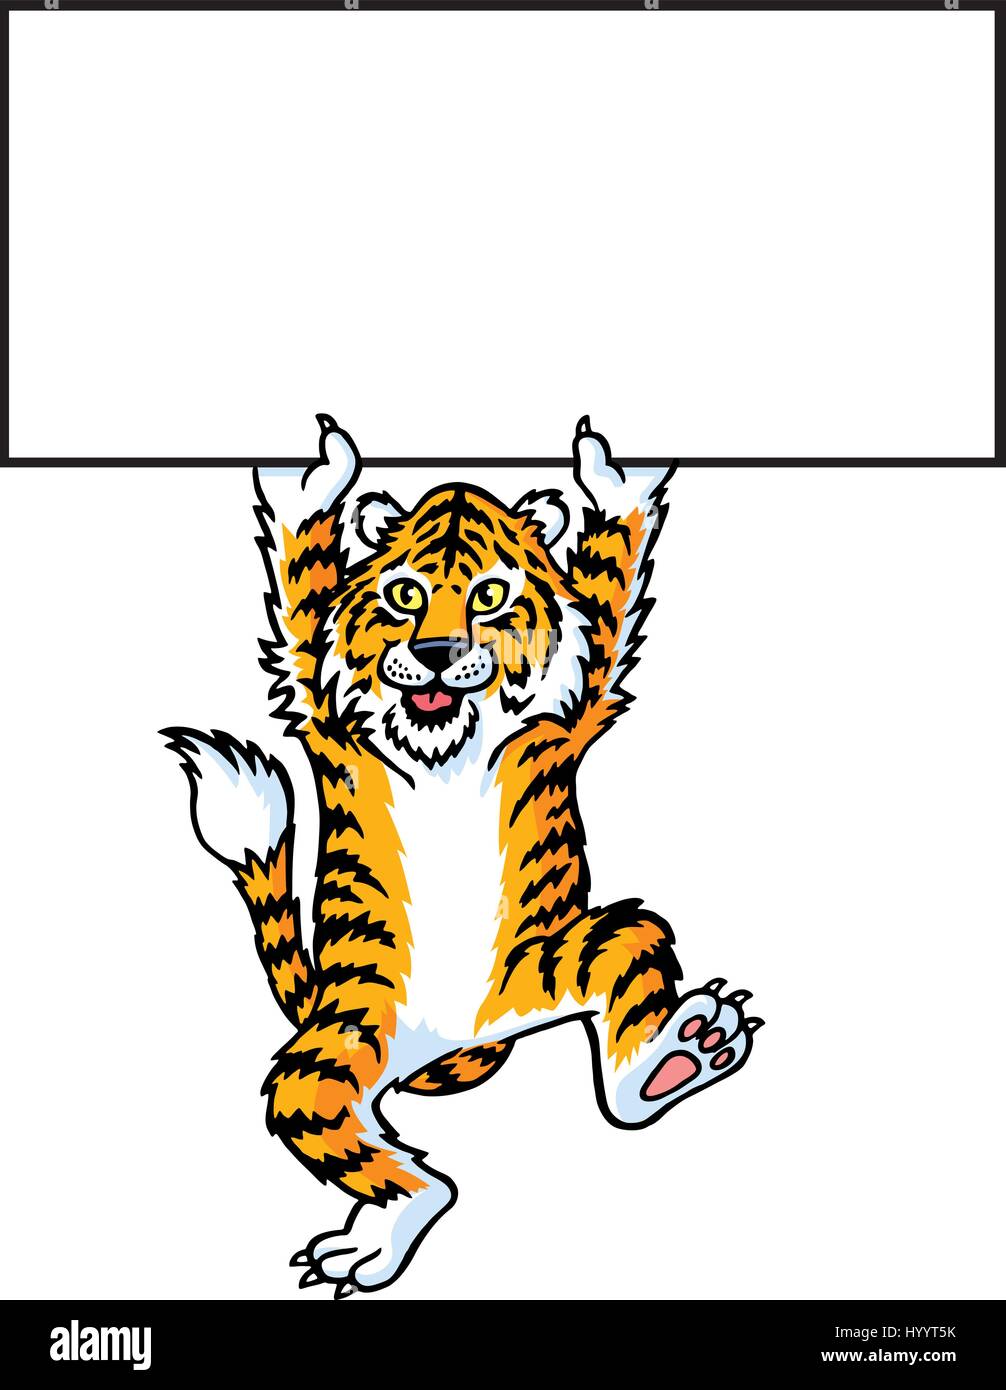 Tiger mit einem Schild. Vektor-Illustration. Stock Vektor